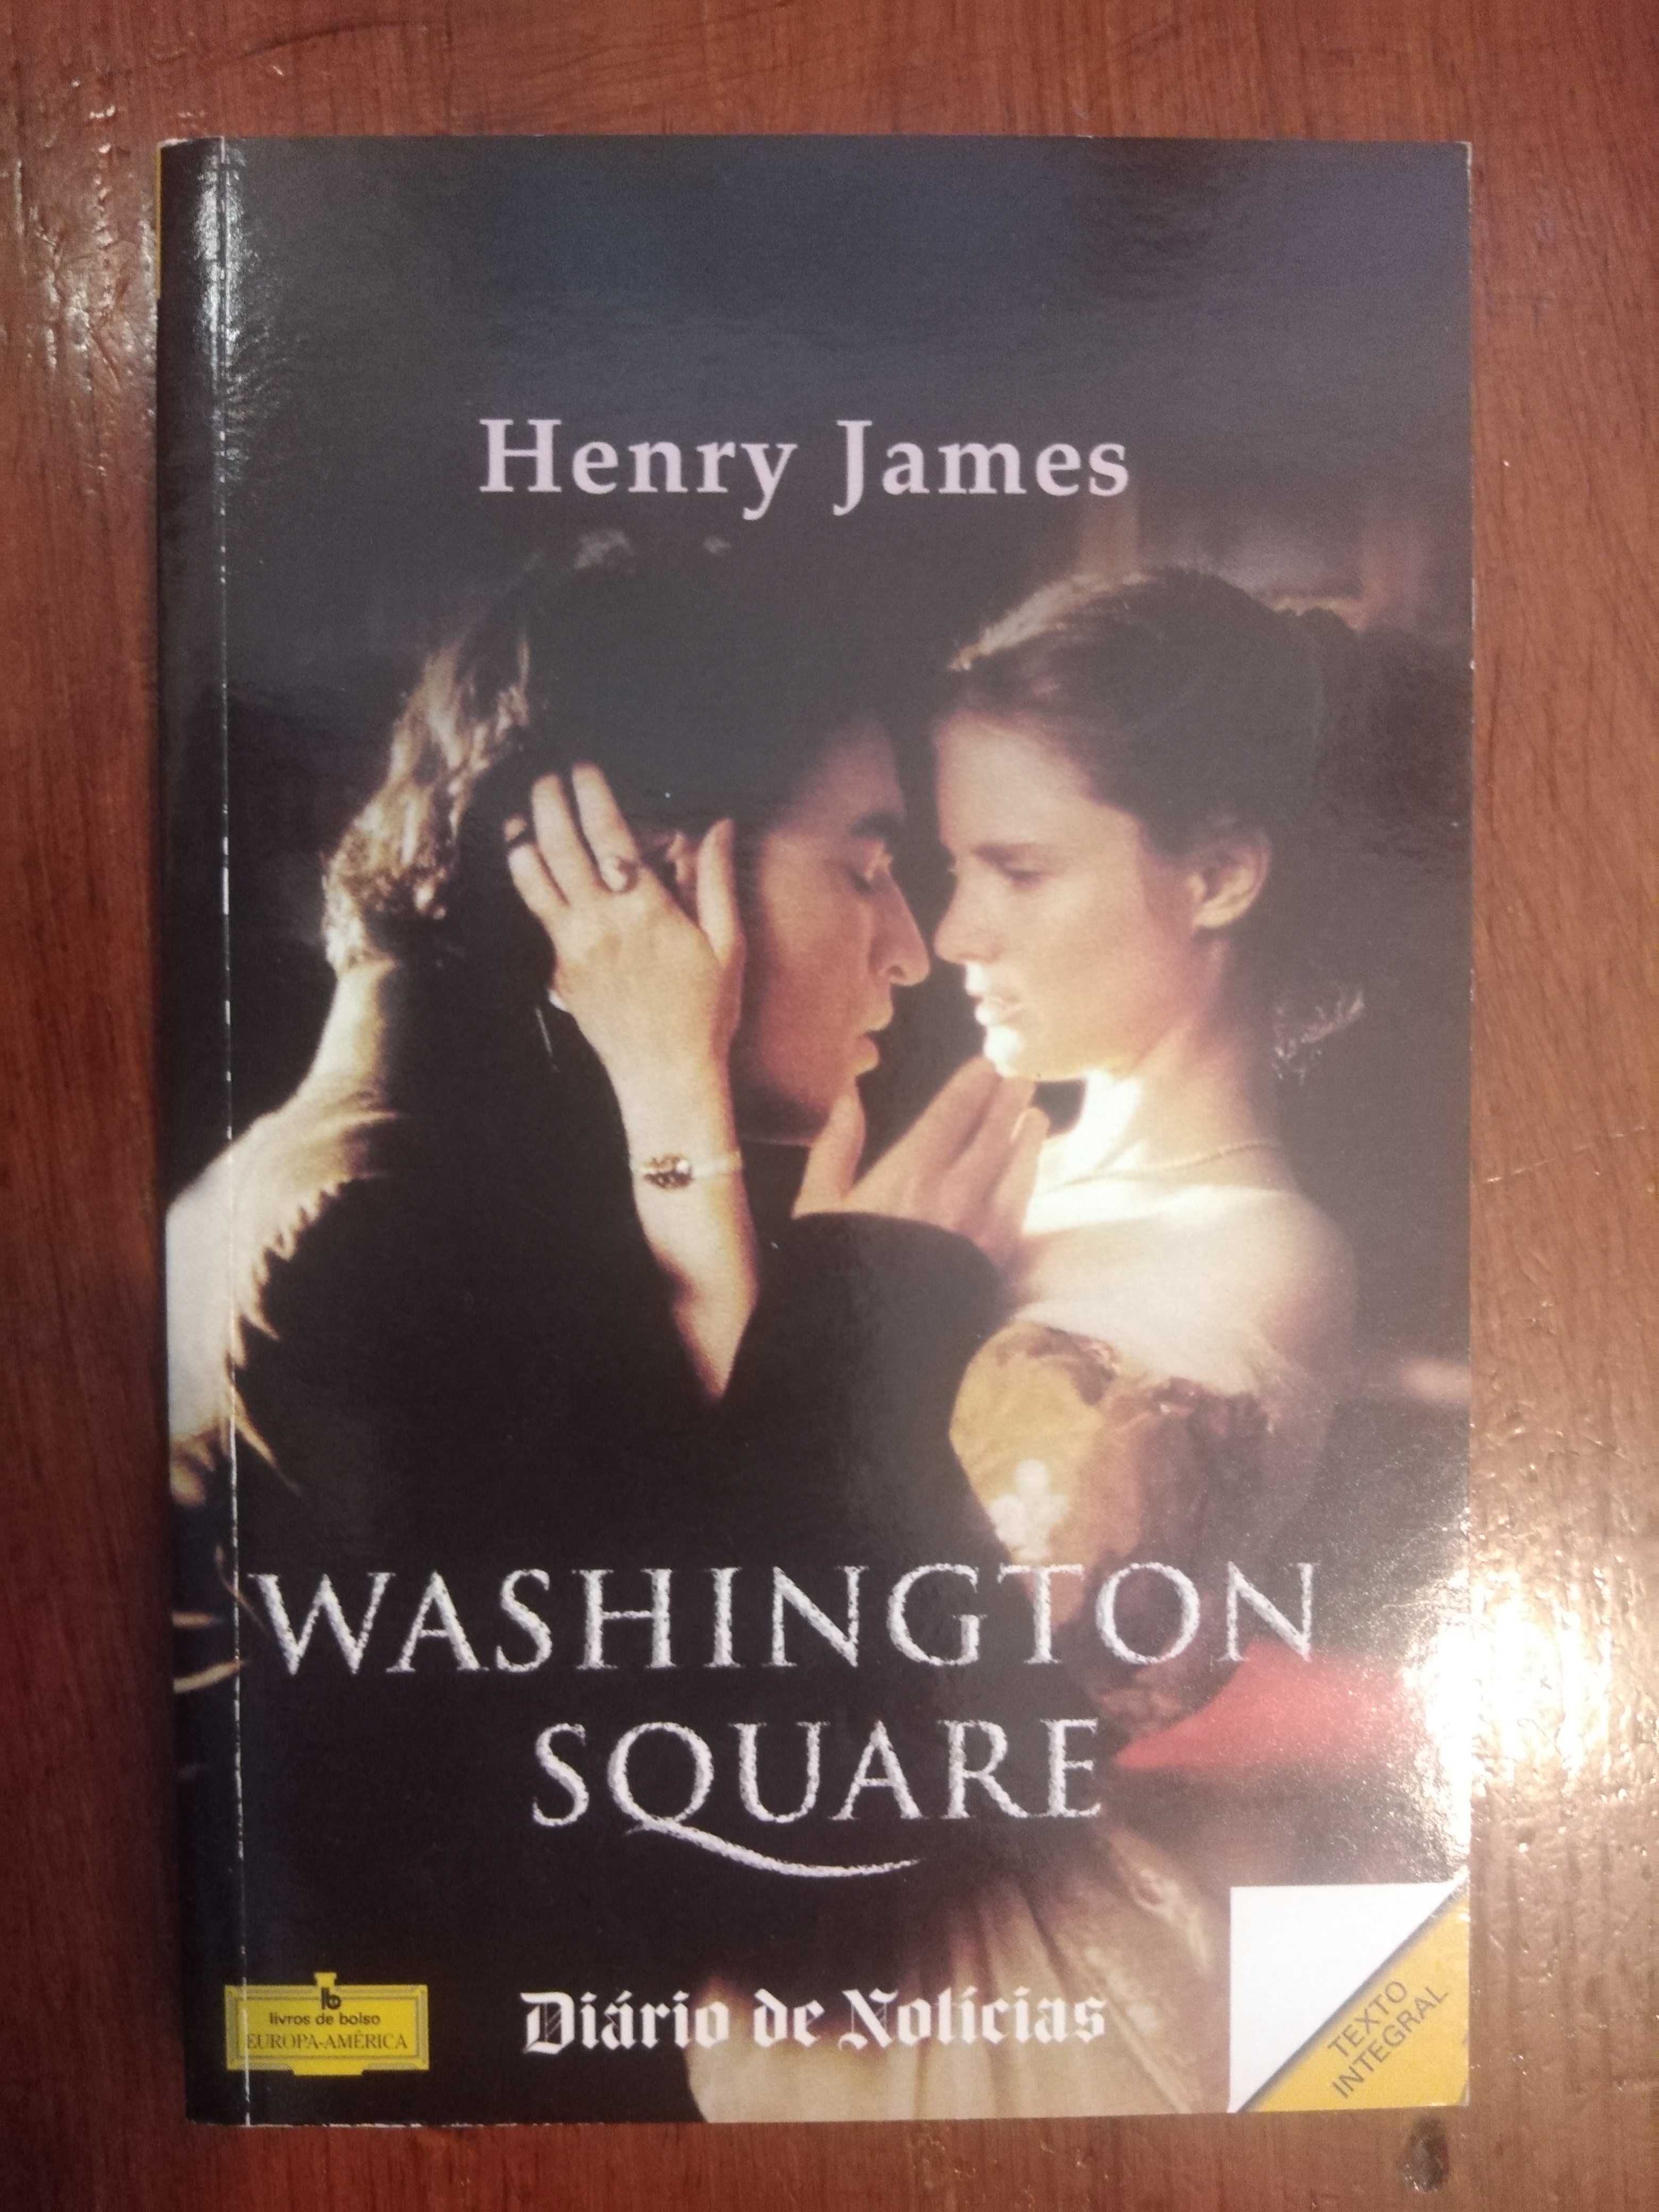 Henry James - Washignton square